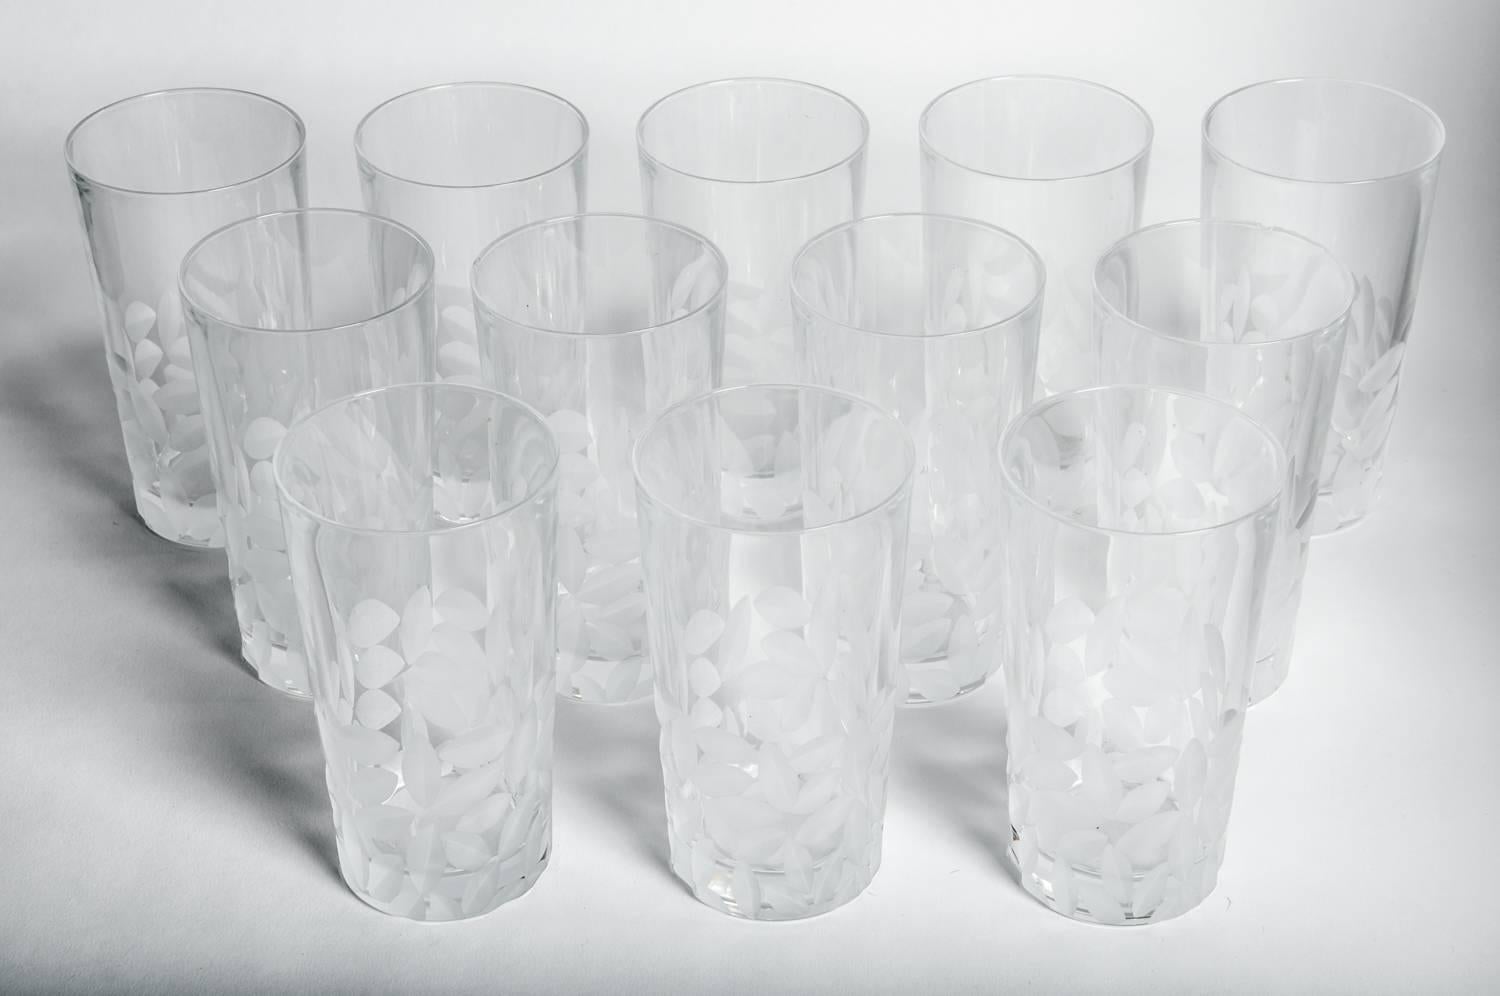 North American Mid-20th Century High Ball Cut Crystal Tiffany Drinks Glassware Set 